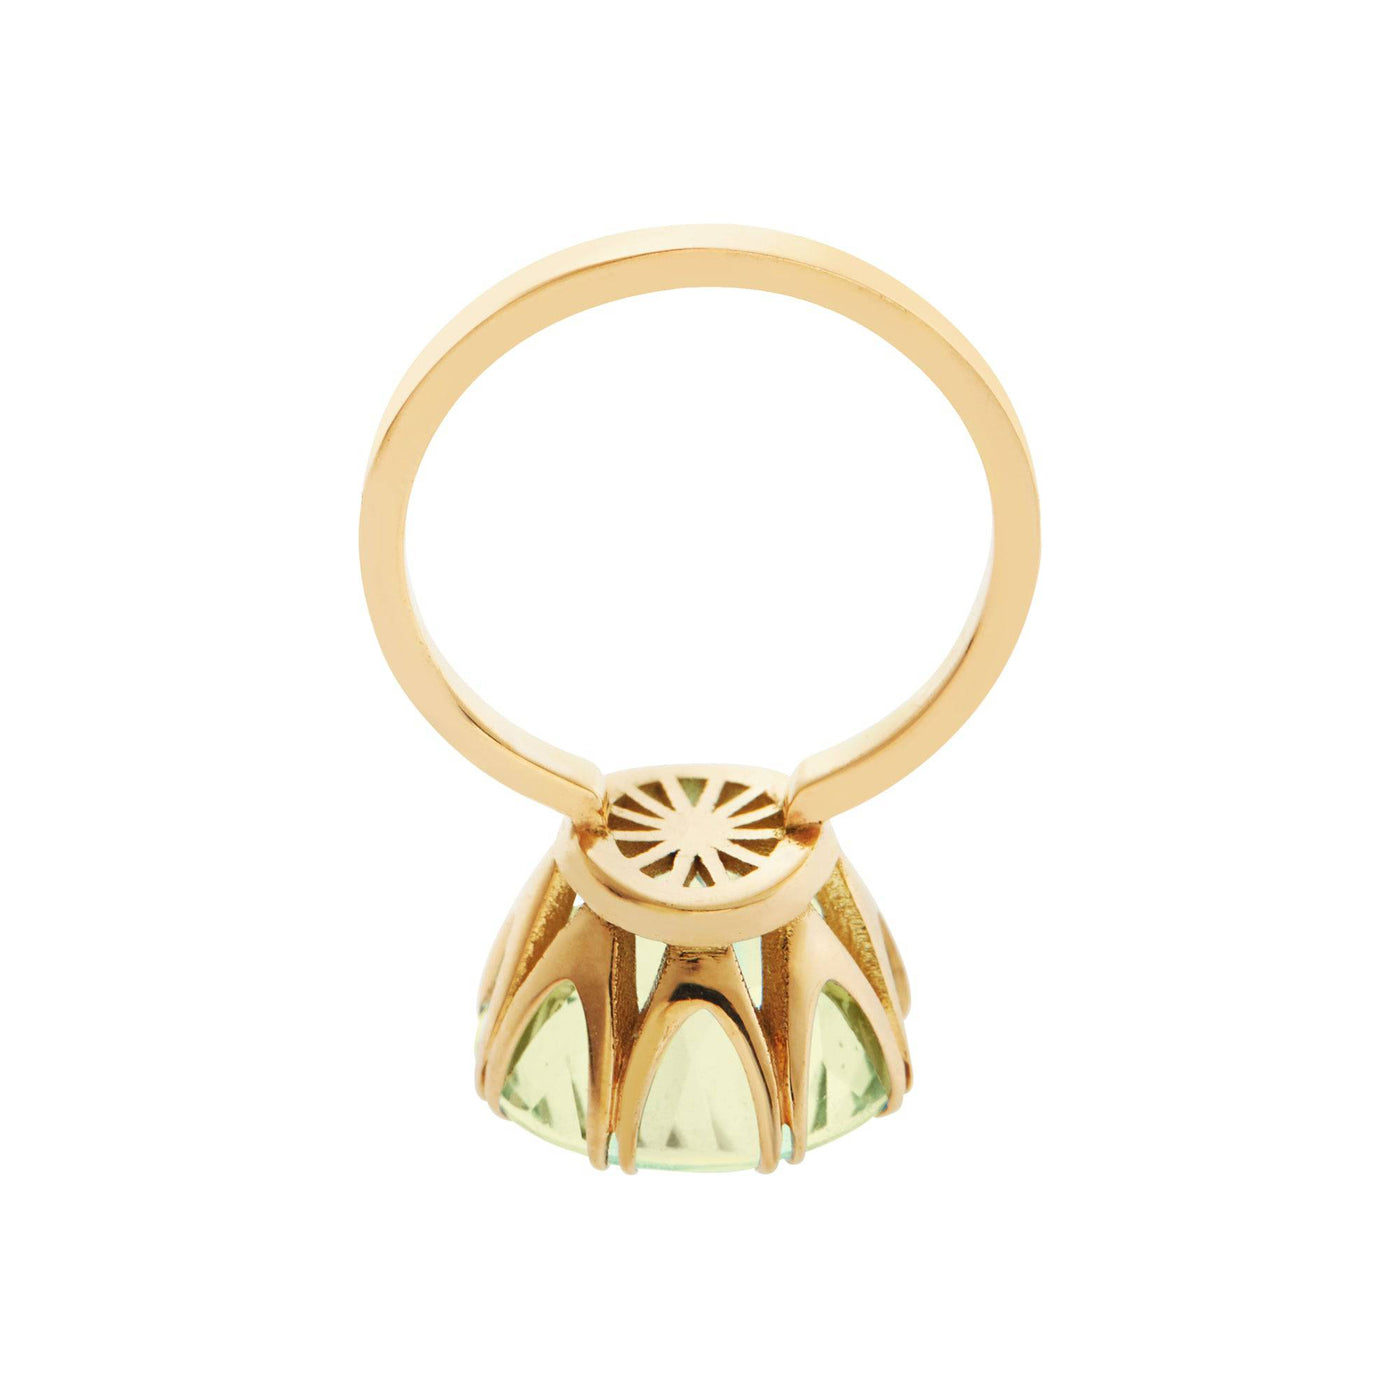 Solitaire Crown Ring Green Amethyst - Crown - Ileana Makri store